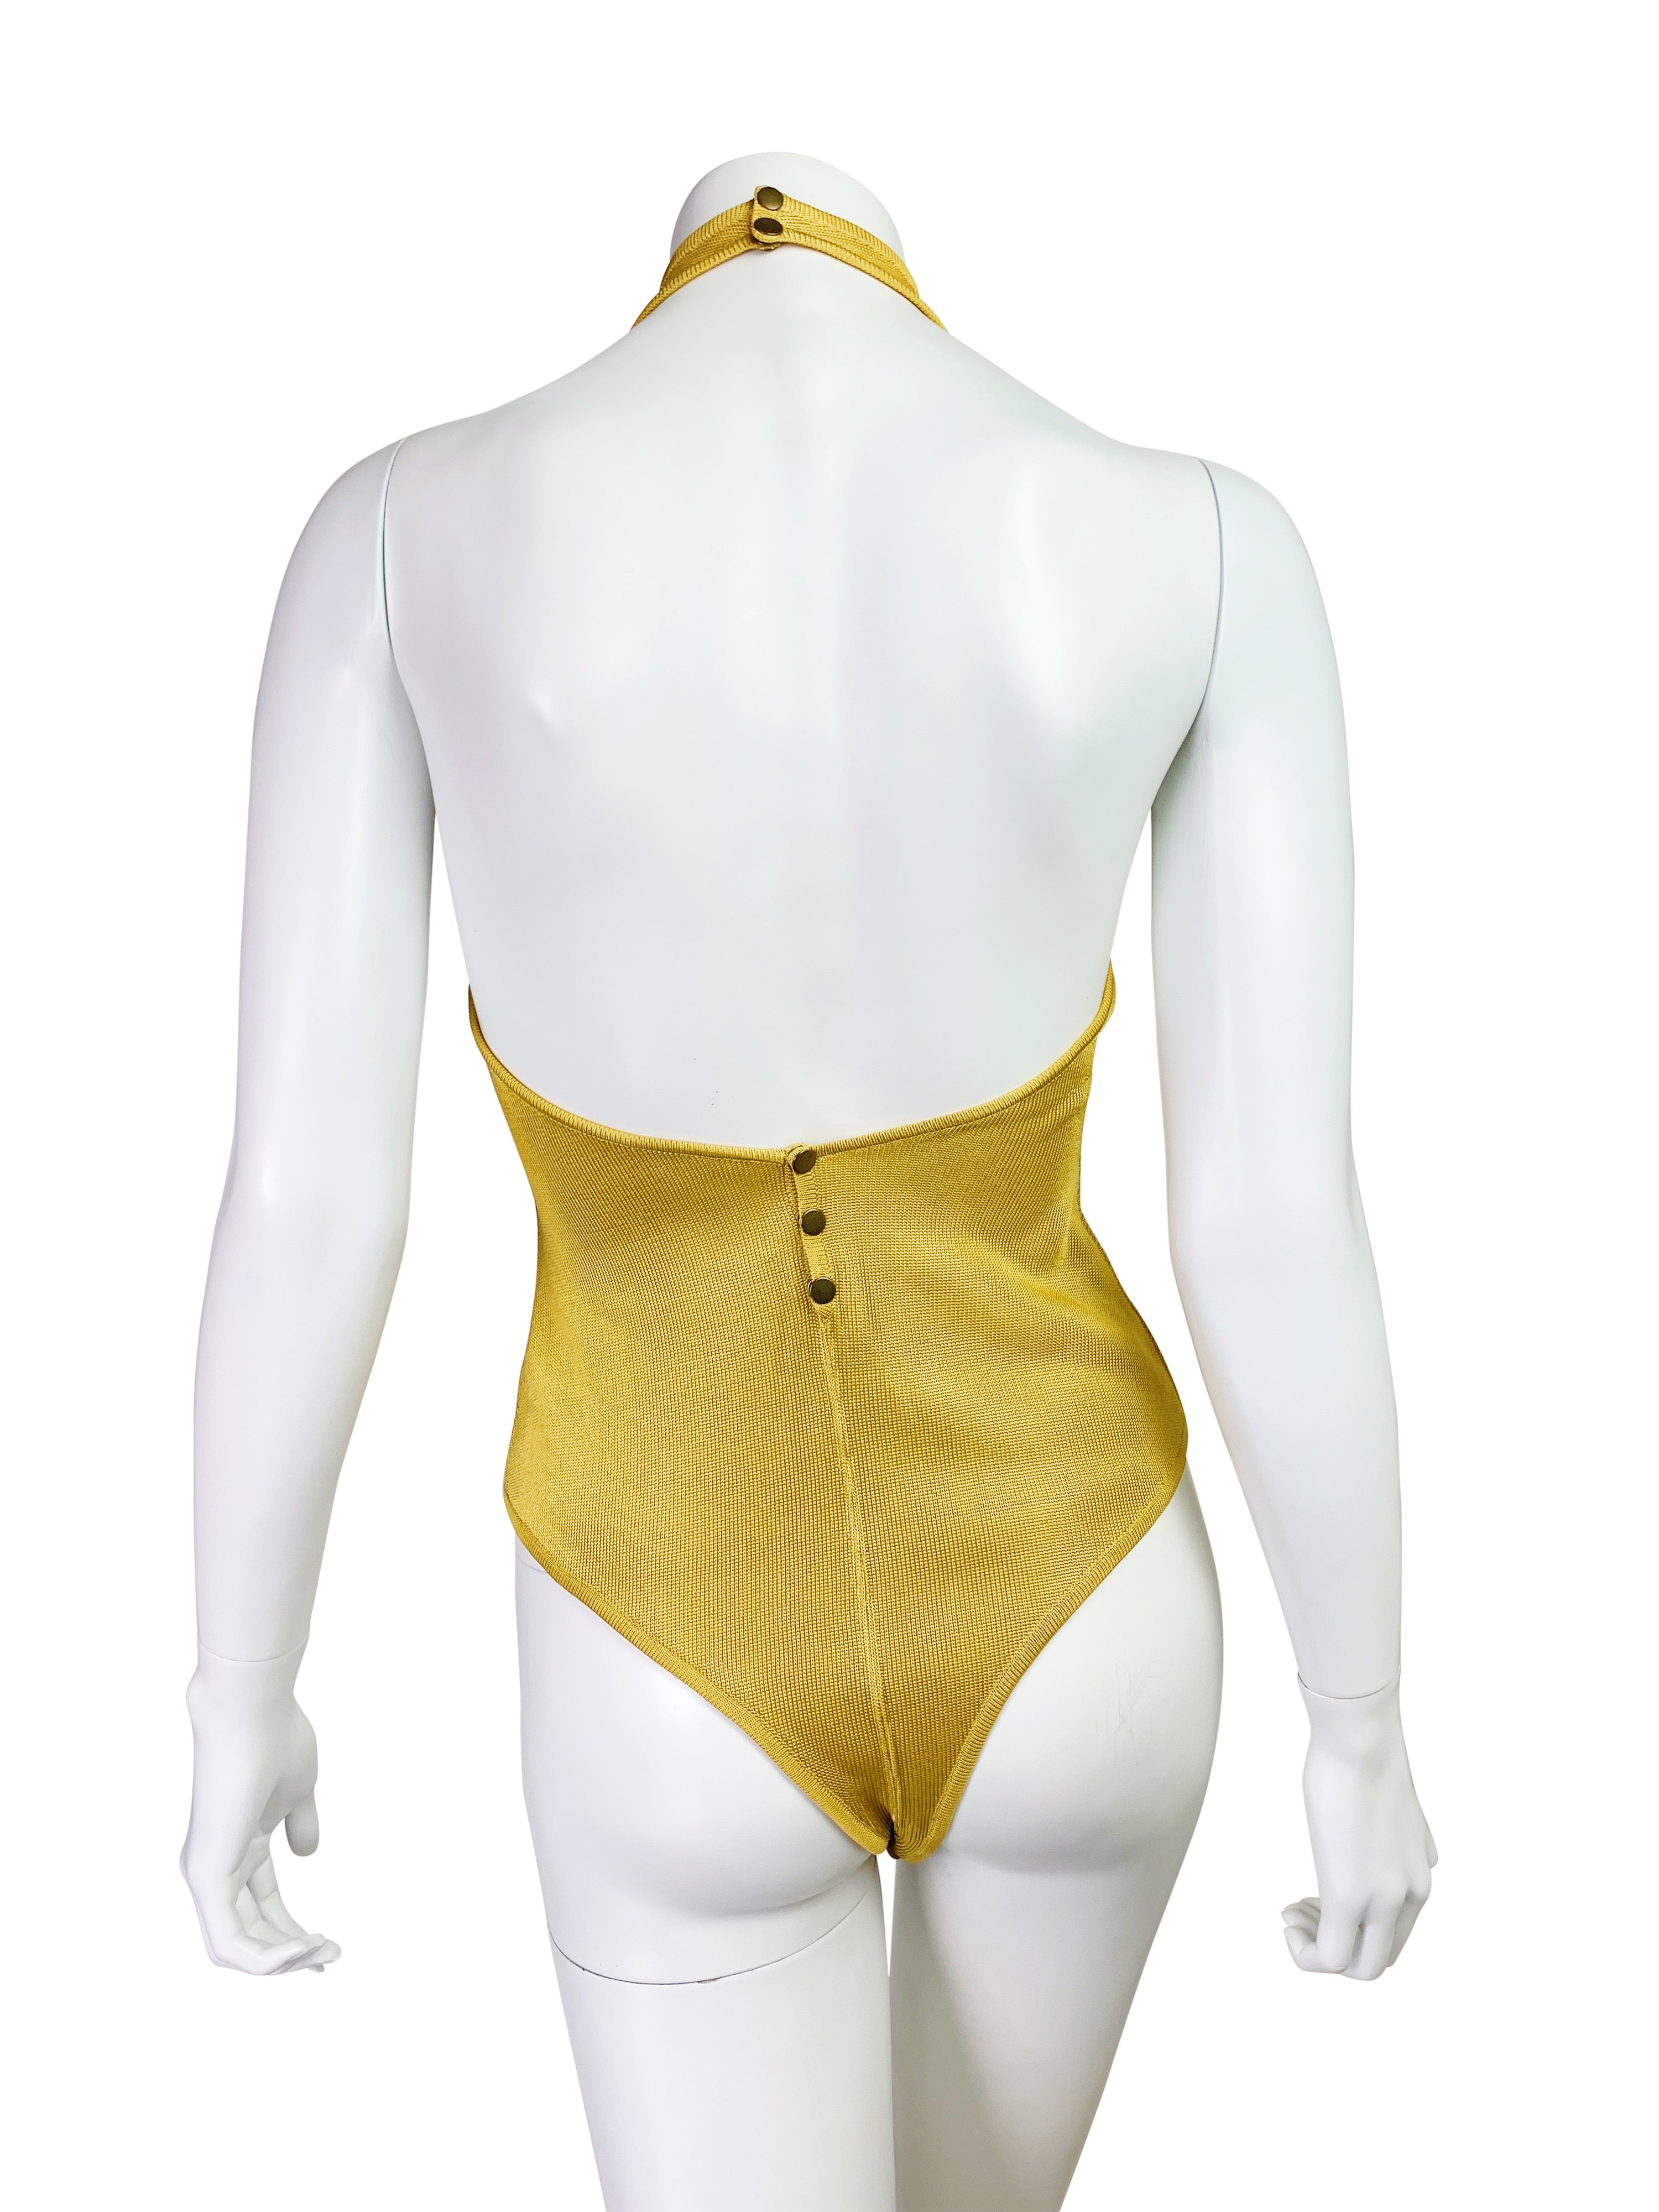 Azzedine Alaïa Spring 1986 Bandage Skirt and Bodysuit set